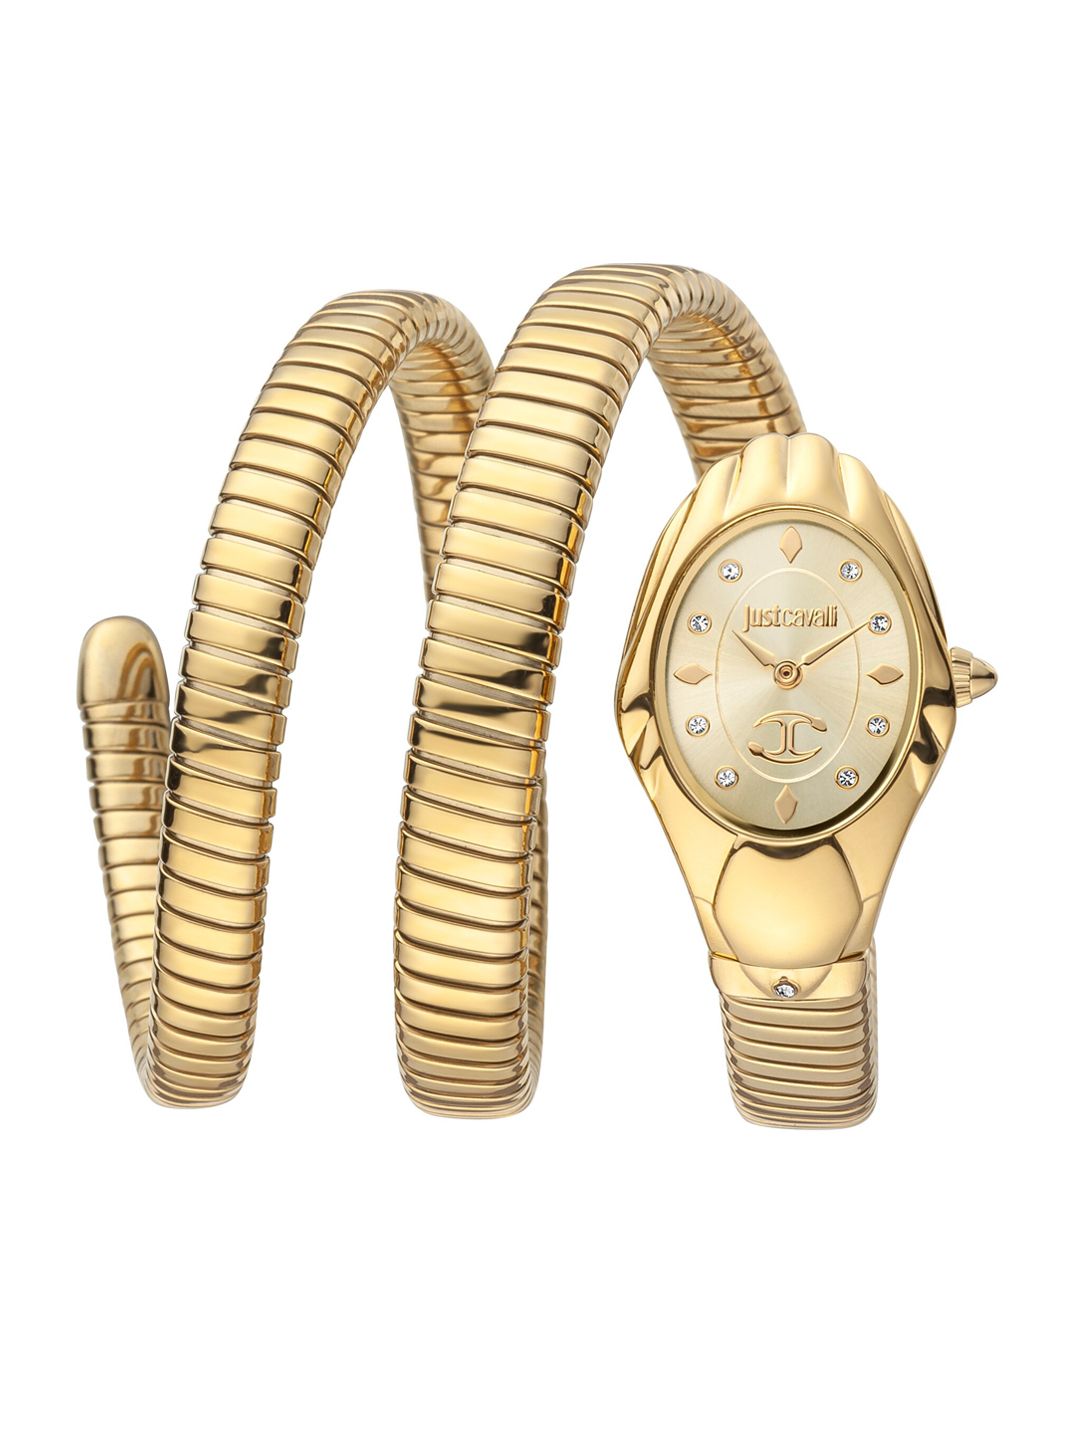 Just Cavalli Women Copper-Toned Brass Dial Wrap Around Straps Watch - JC1L184M0025 Price in India